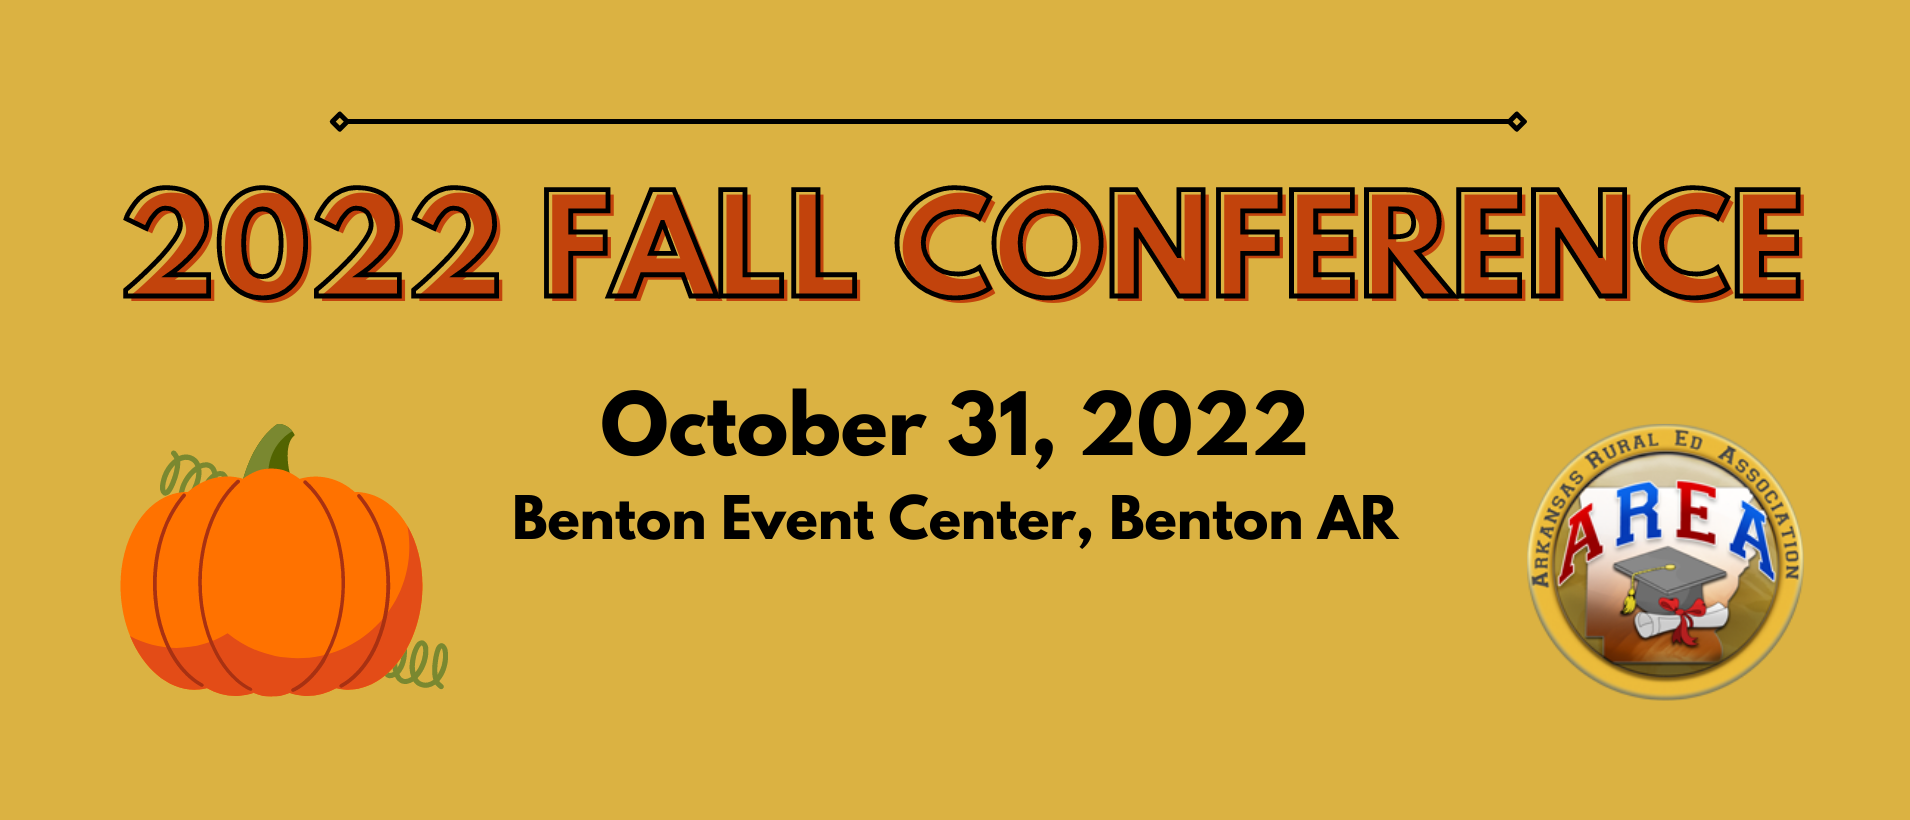 2022 Fall Conference Oct. 31 at Benton Event Center in Benton Arkansas